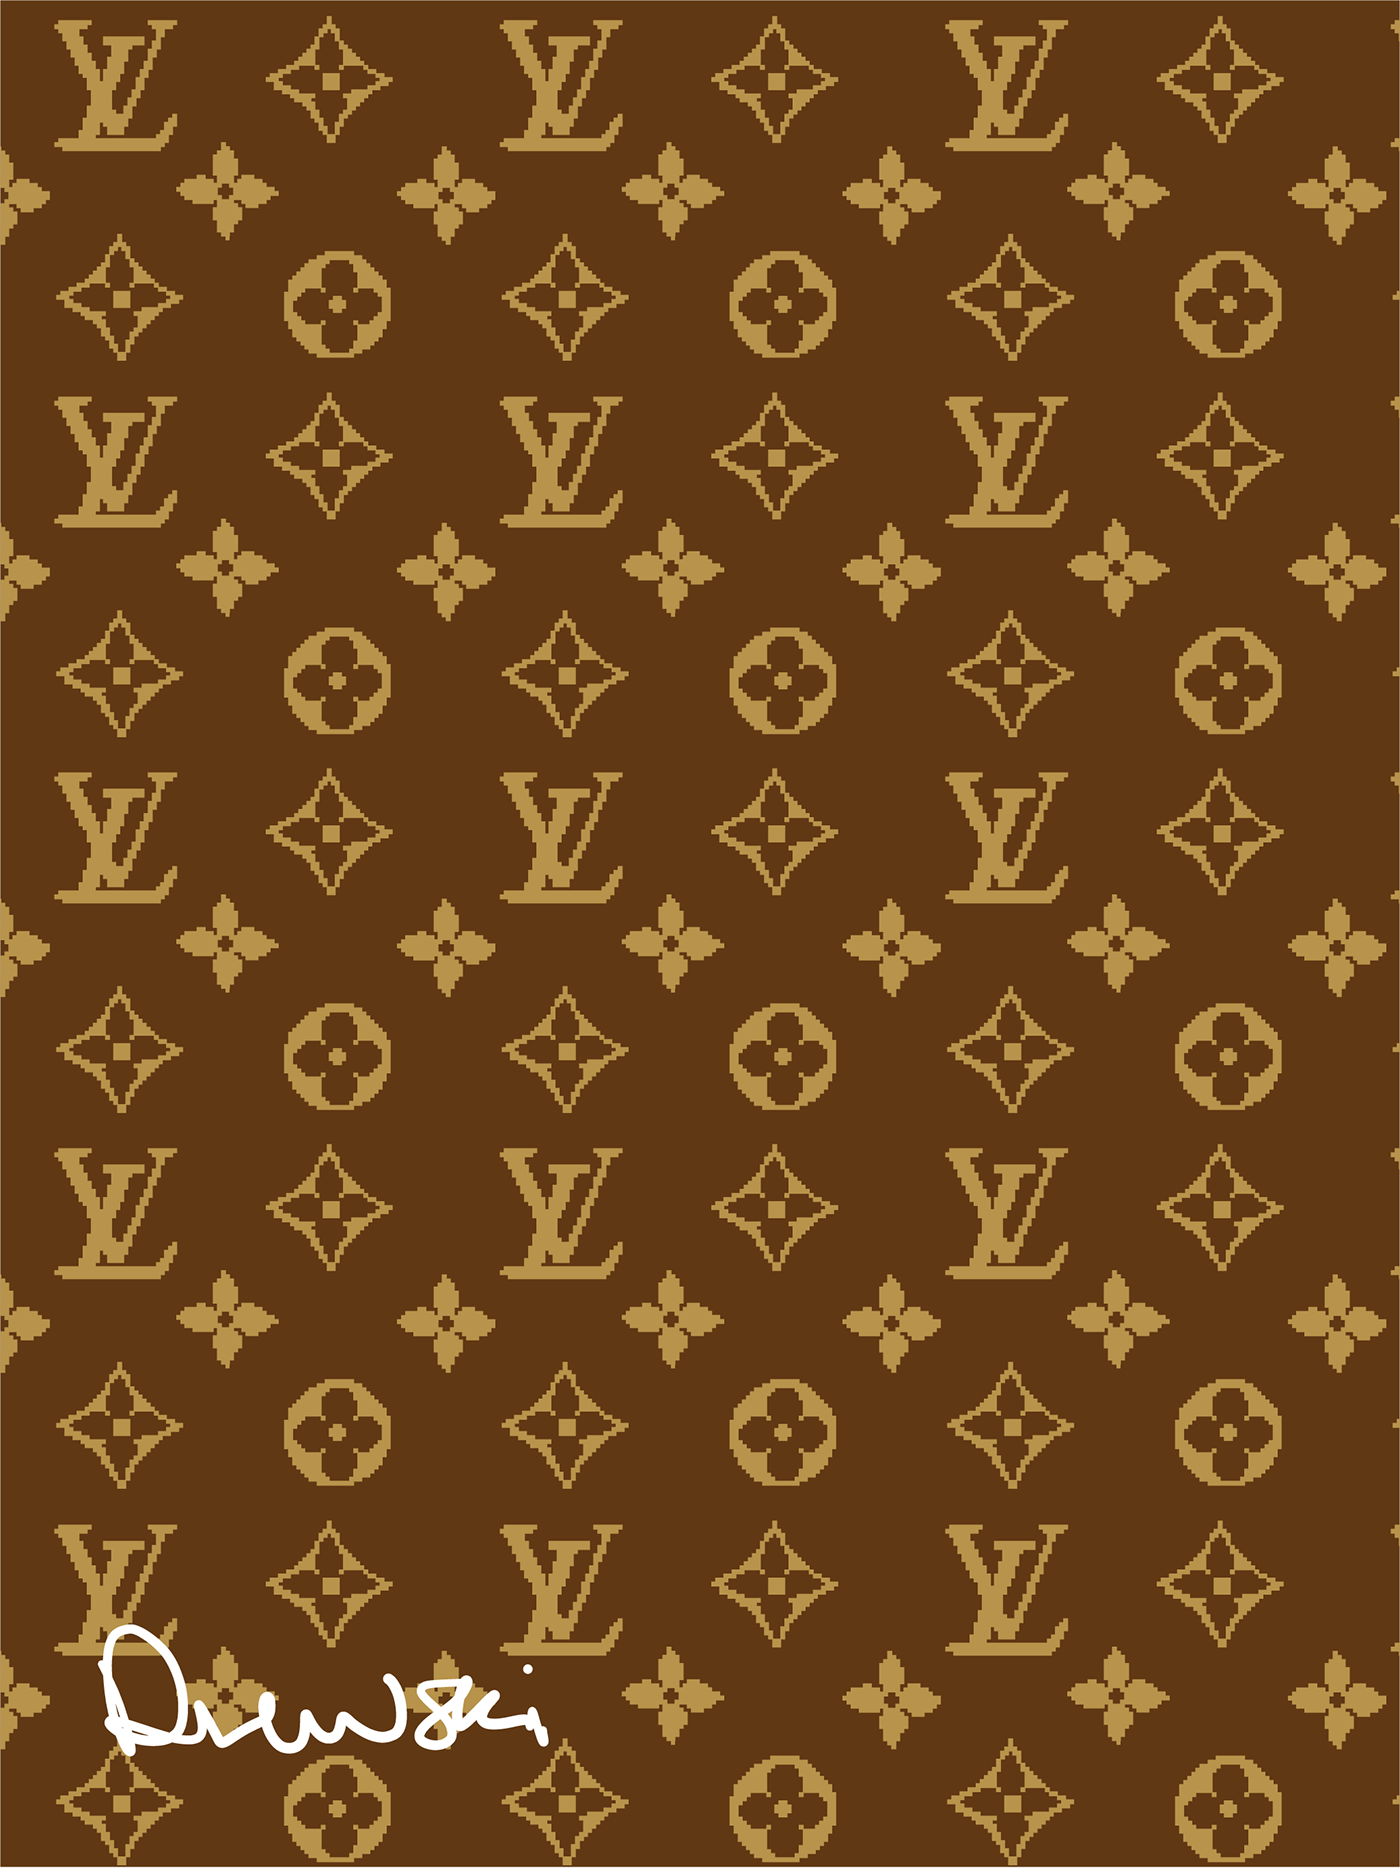 pixel art louis vuitton cross stitch pattern